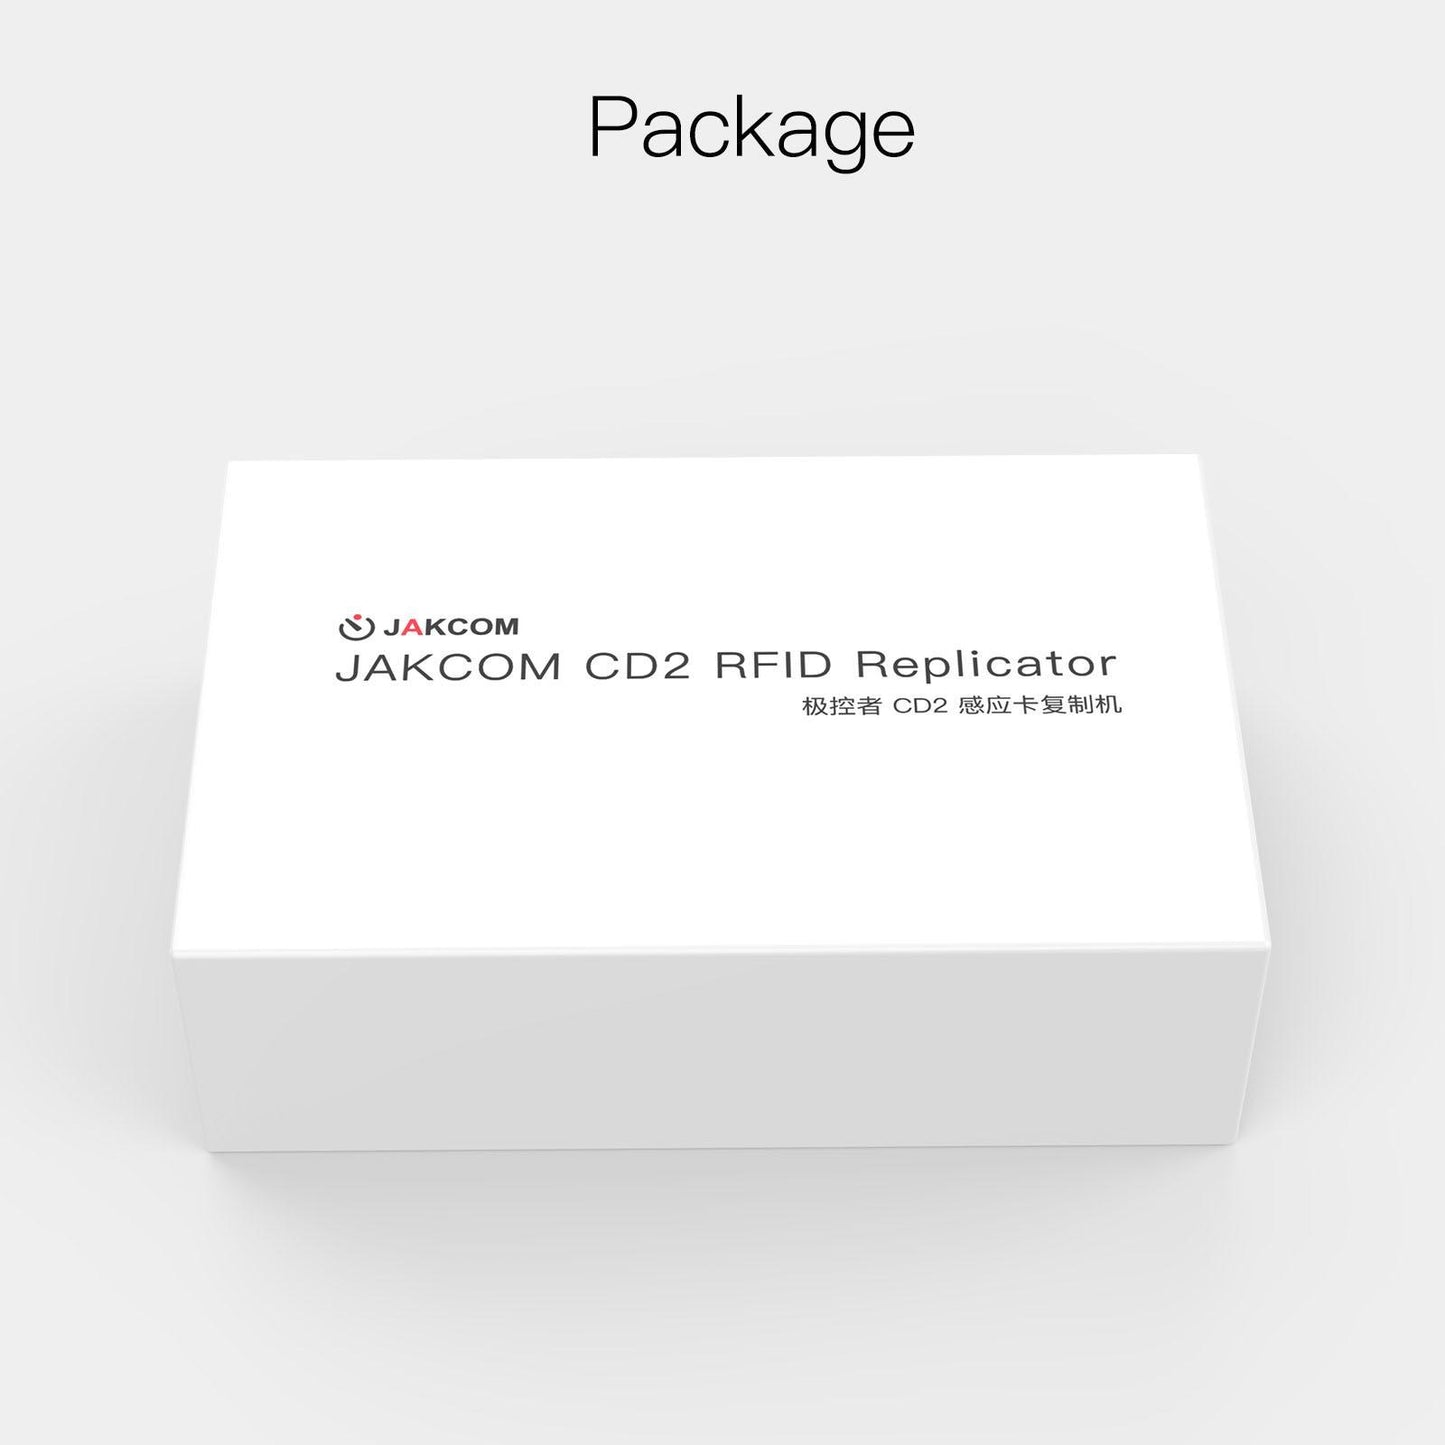 JAKCOM CD2 RFID Replicator For R4 Smart Ring